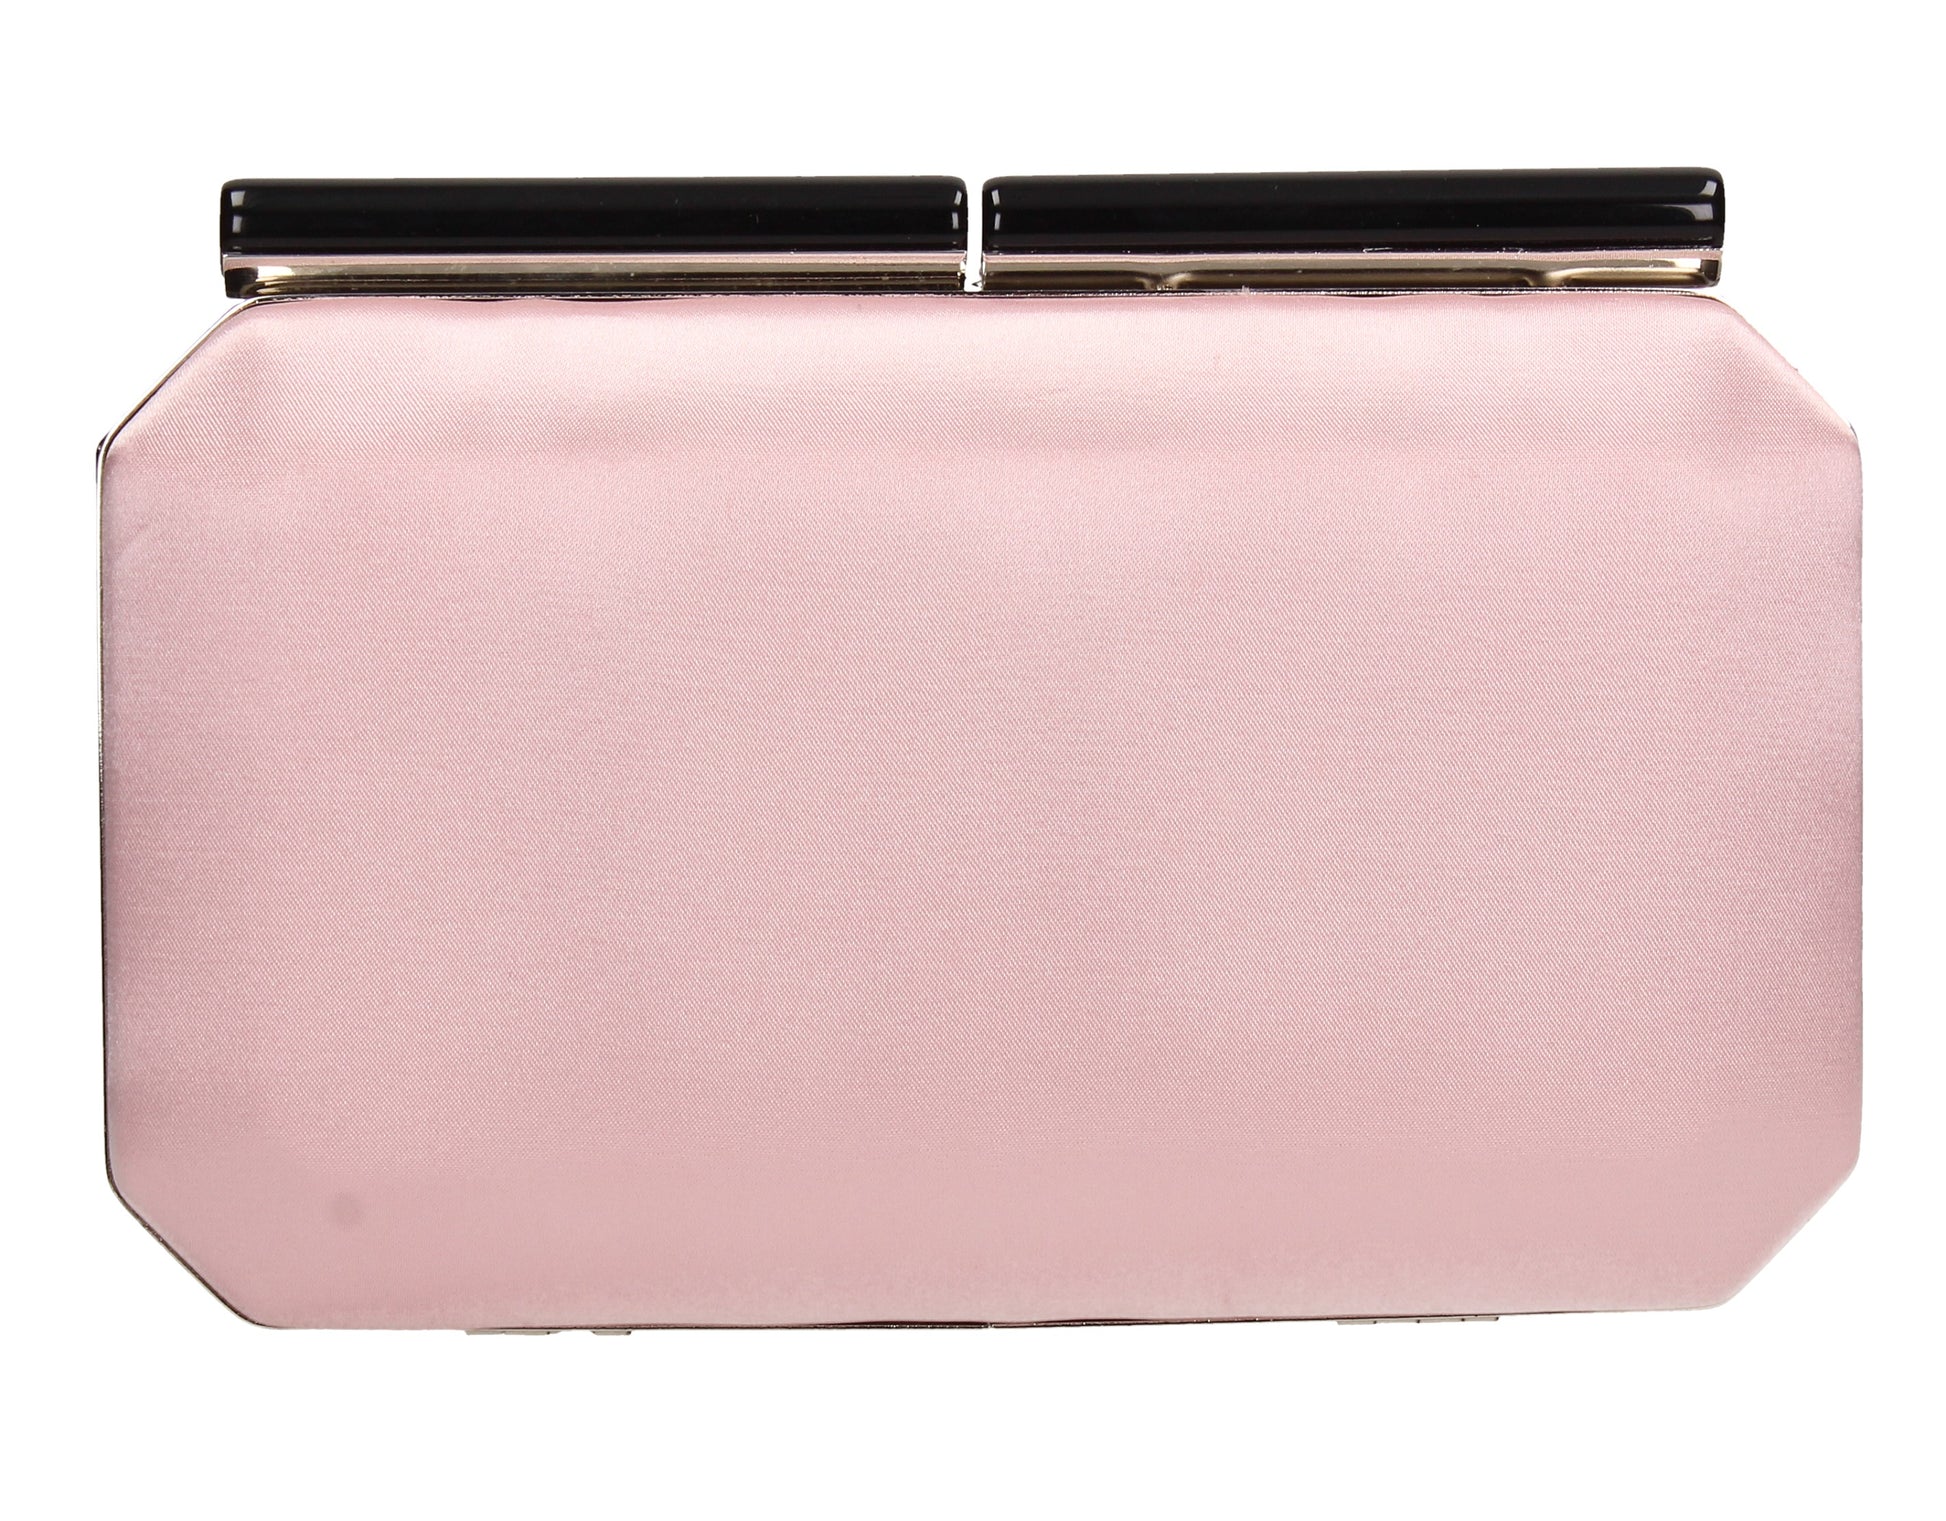 SWANKYSWANS Millie Clutch Bag Pink Cute Cheap Clutch Bag For Weddings School and Work